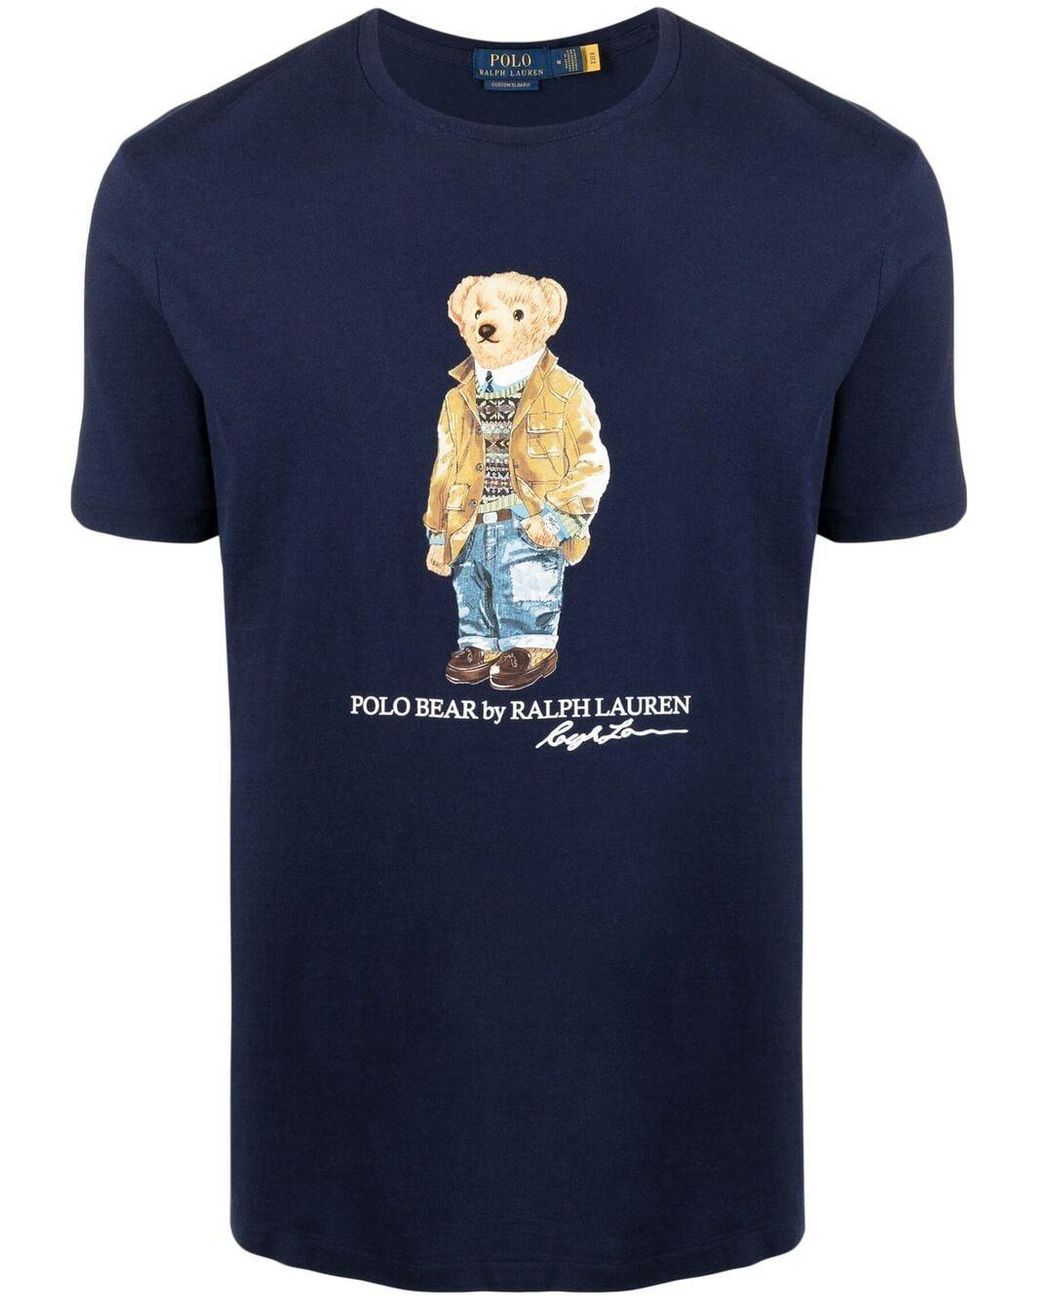 Polo Ralph Lauren Cotton Polo Bear Print T-shirt in Blue for Men - Lyst